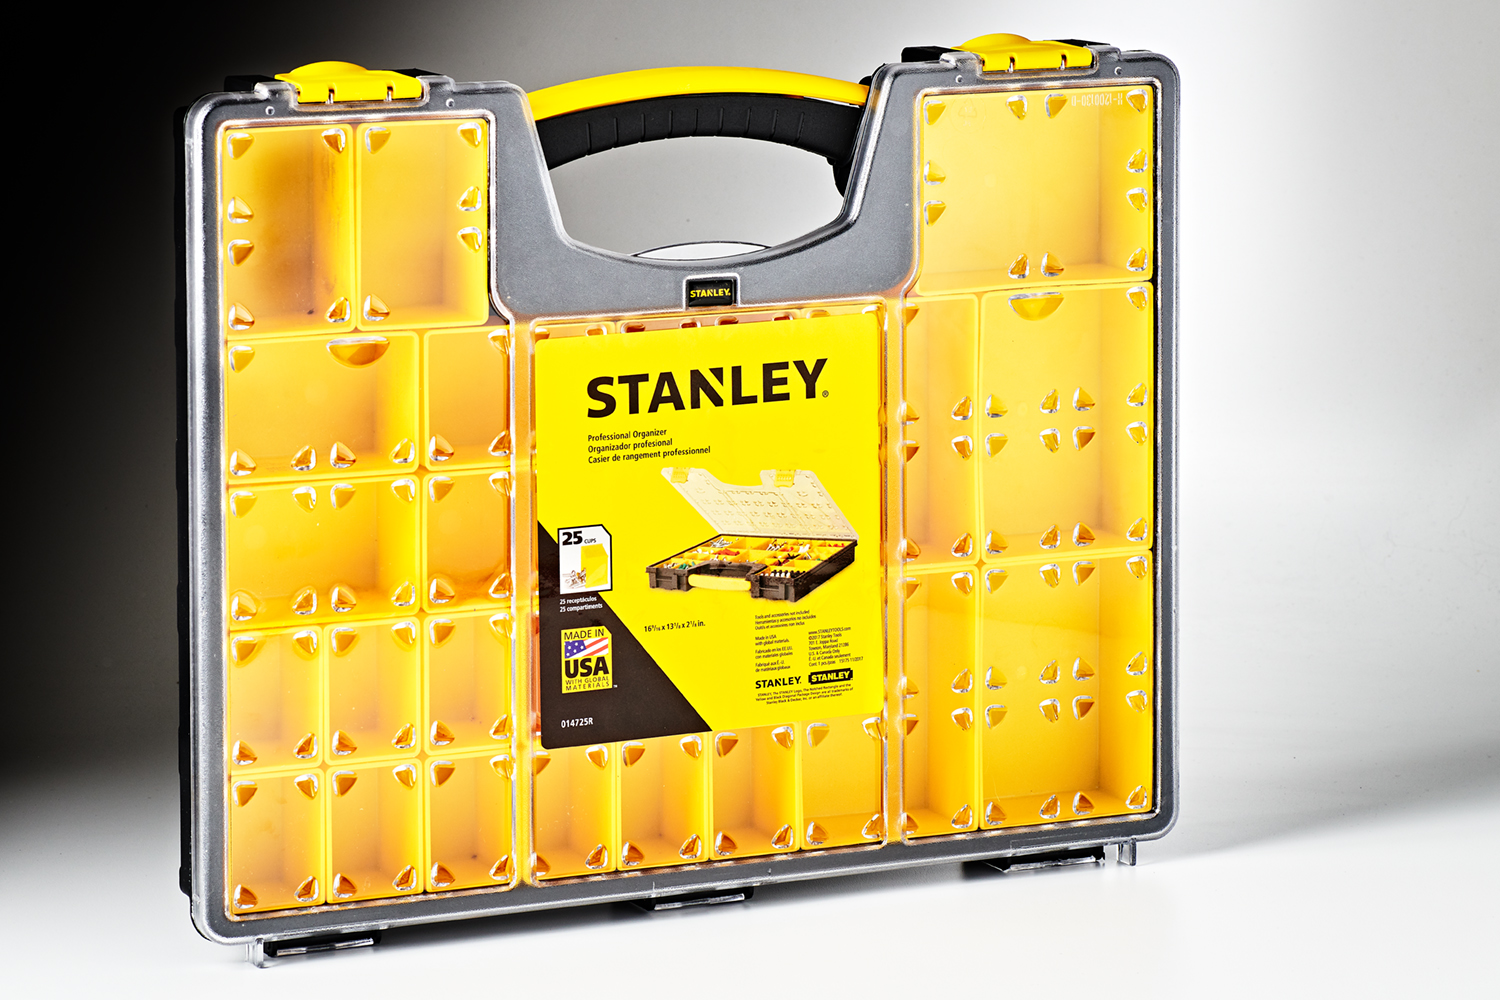 Stanley 25-Compartment Deep Professional Organizer